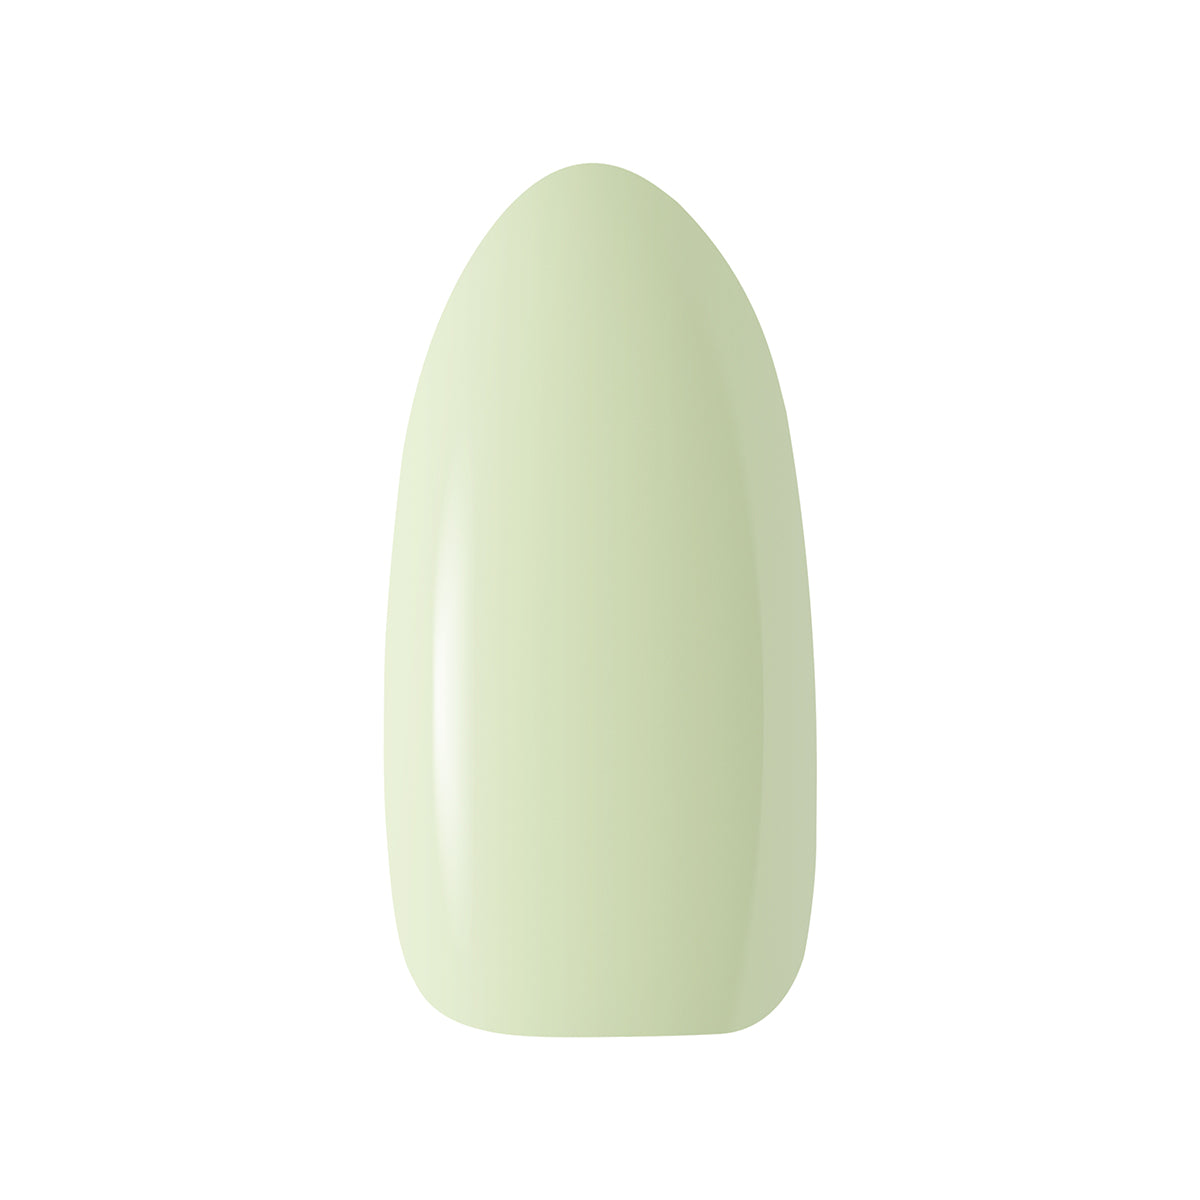 OCHO NAILS Hybrid nail polish pastels P05 -5 g